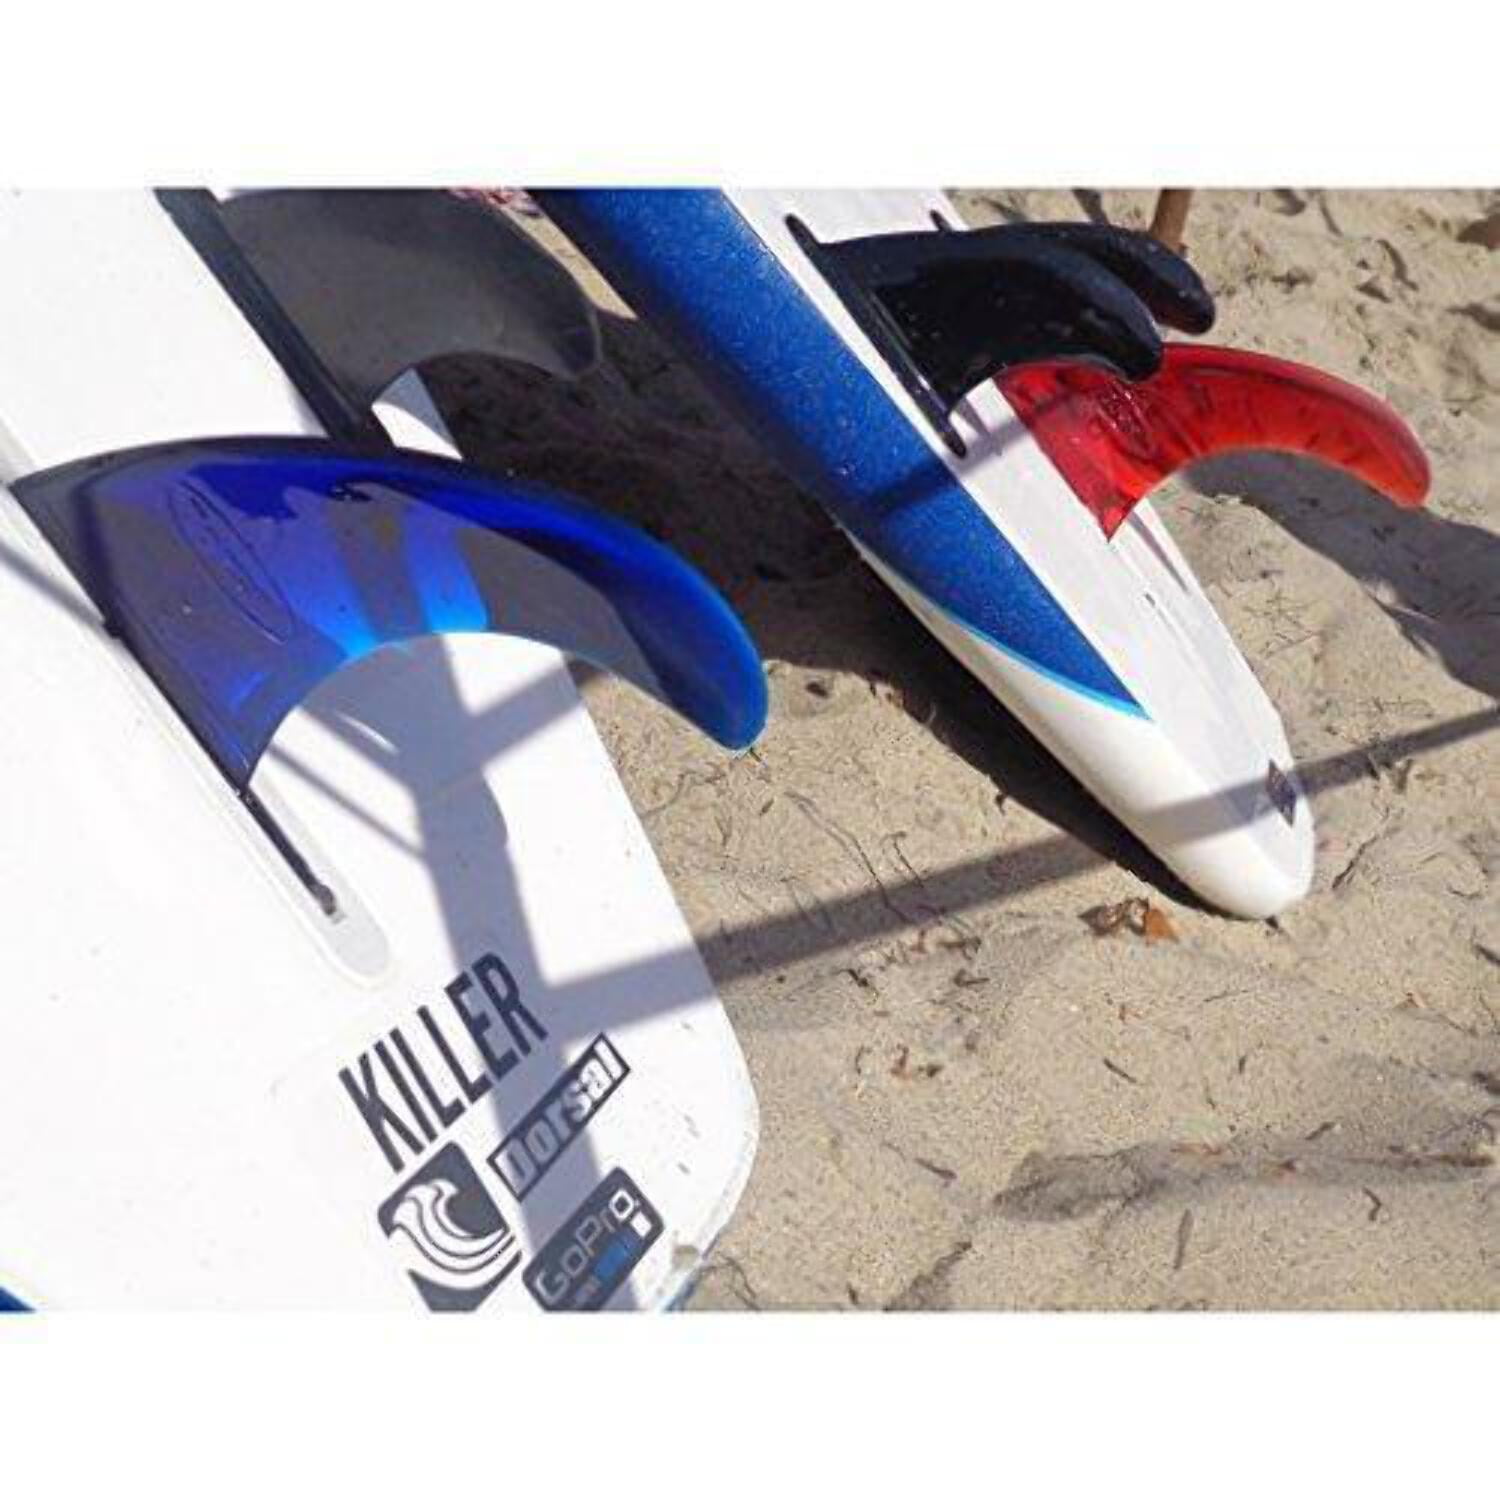 Details about   DORSAL Signature Surf SUP Single Center Fin Longboard Surfboard Fins Blue 